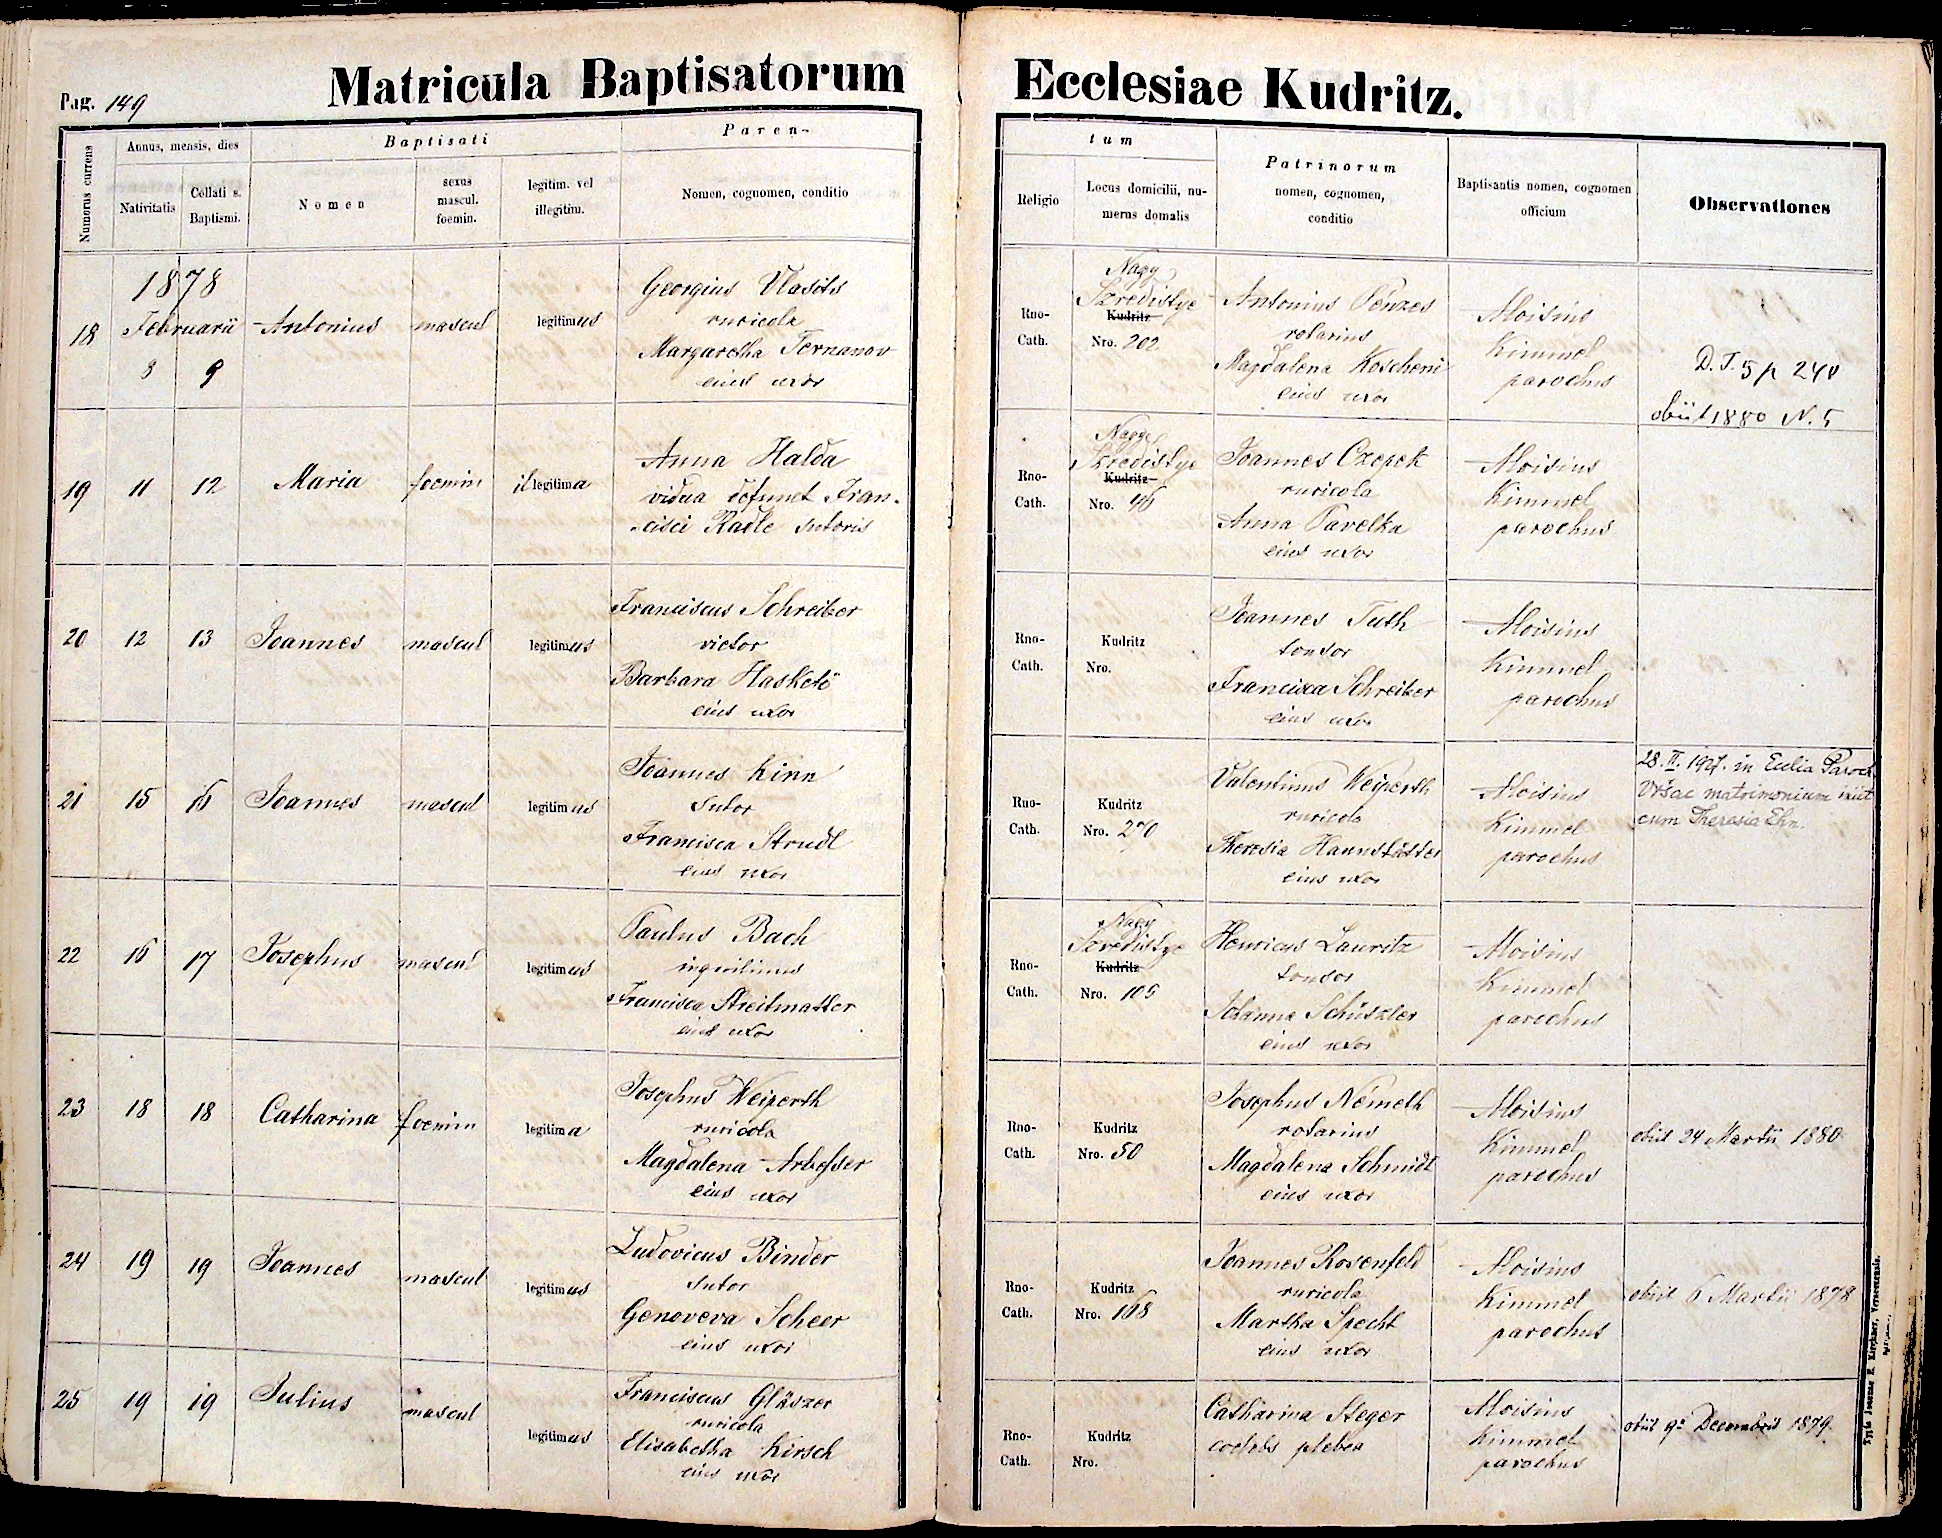 images/church_records/BIRTHS/1870-1879B/1878/149